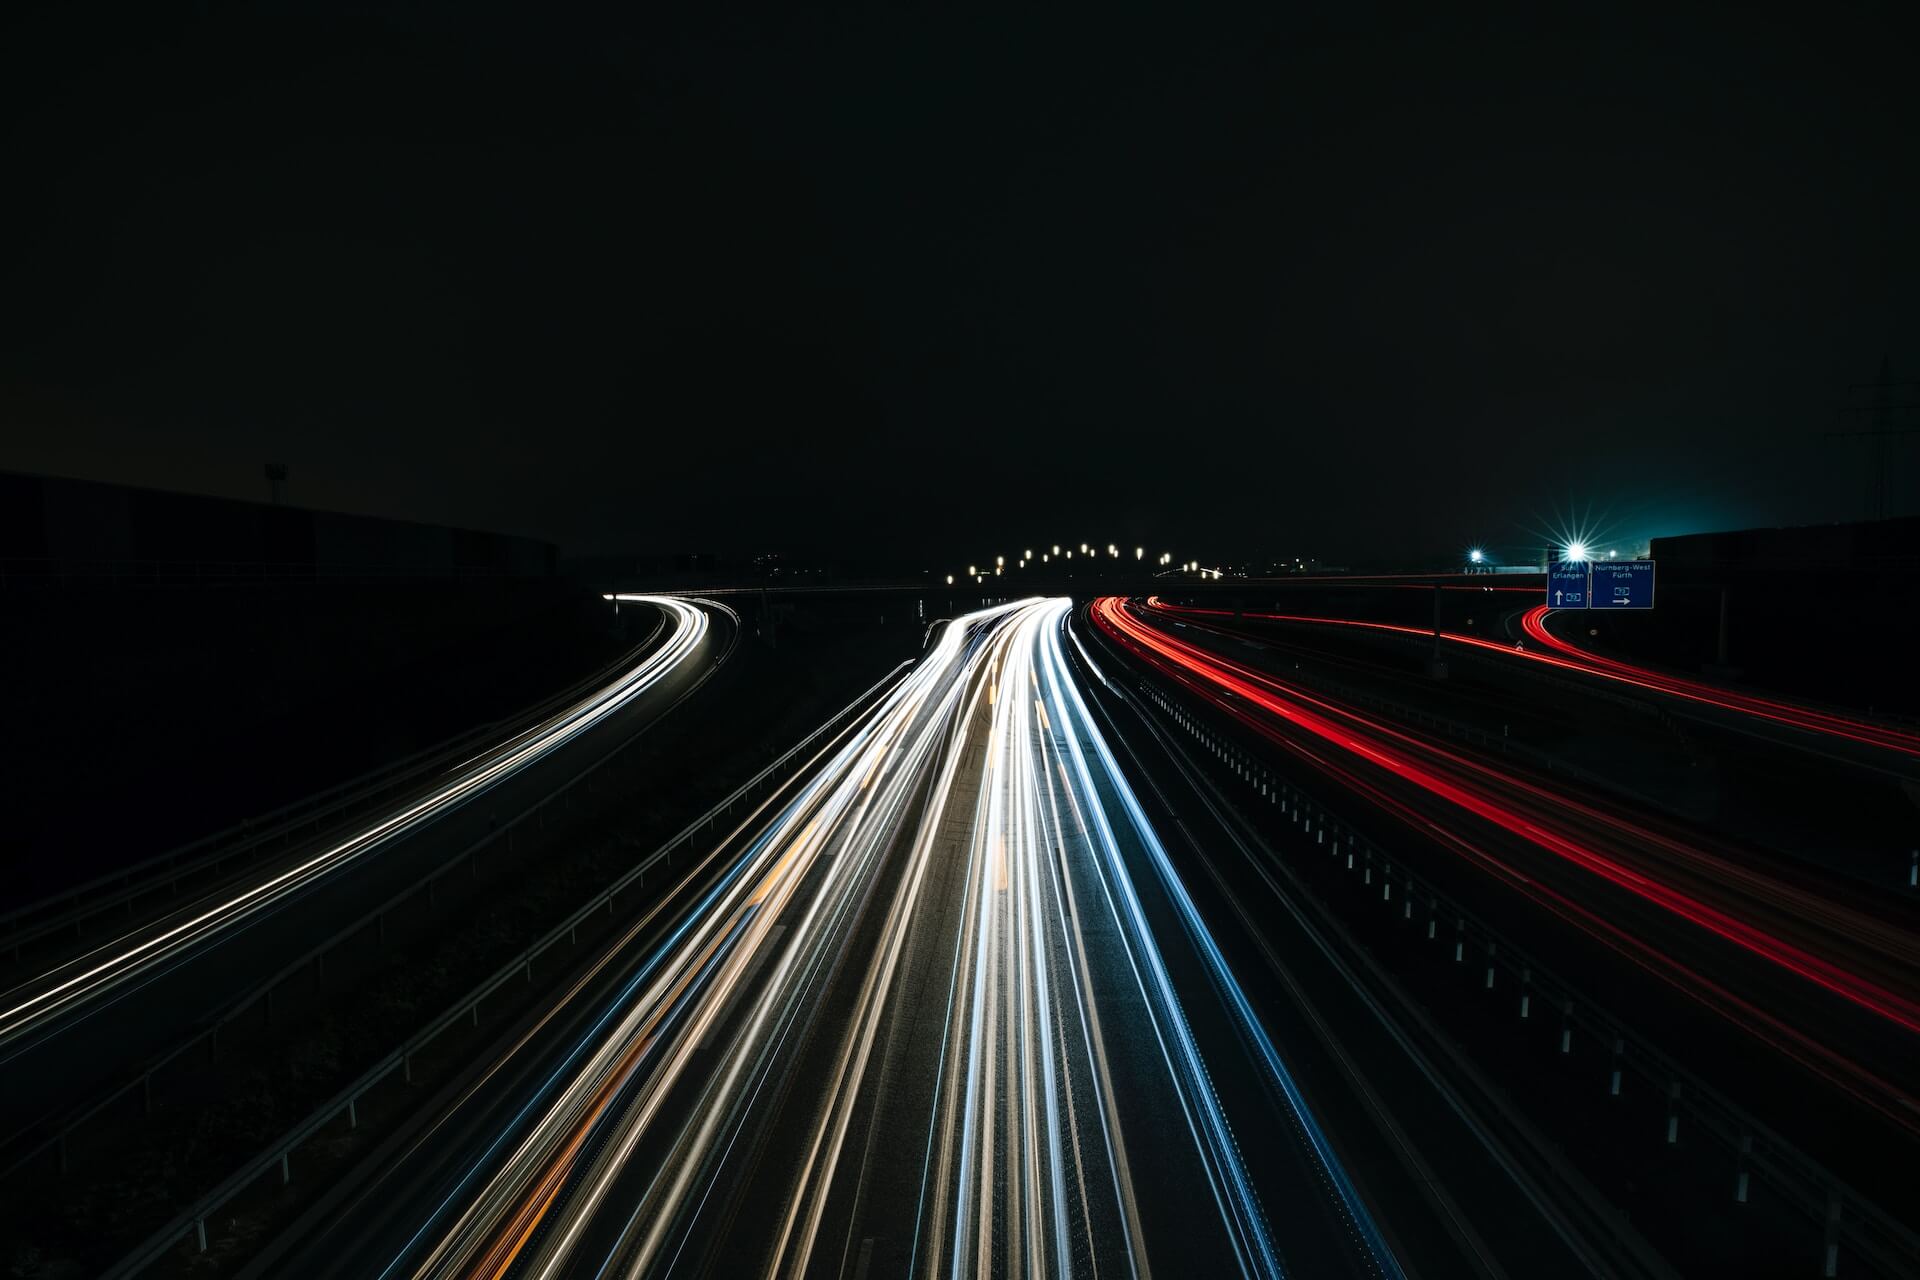 blurred headlights on a motorway